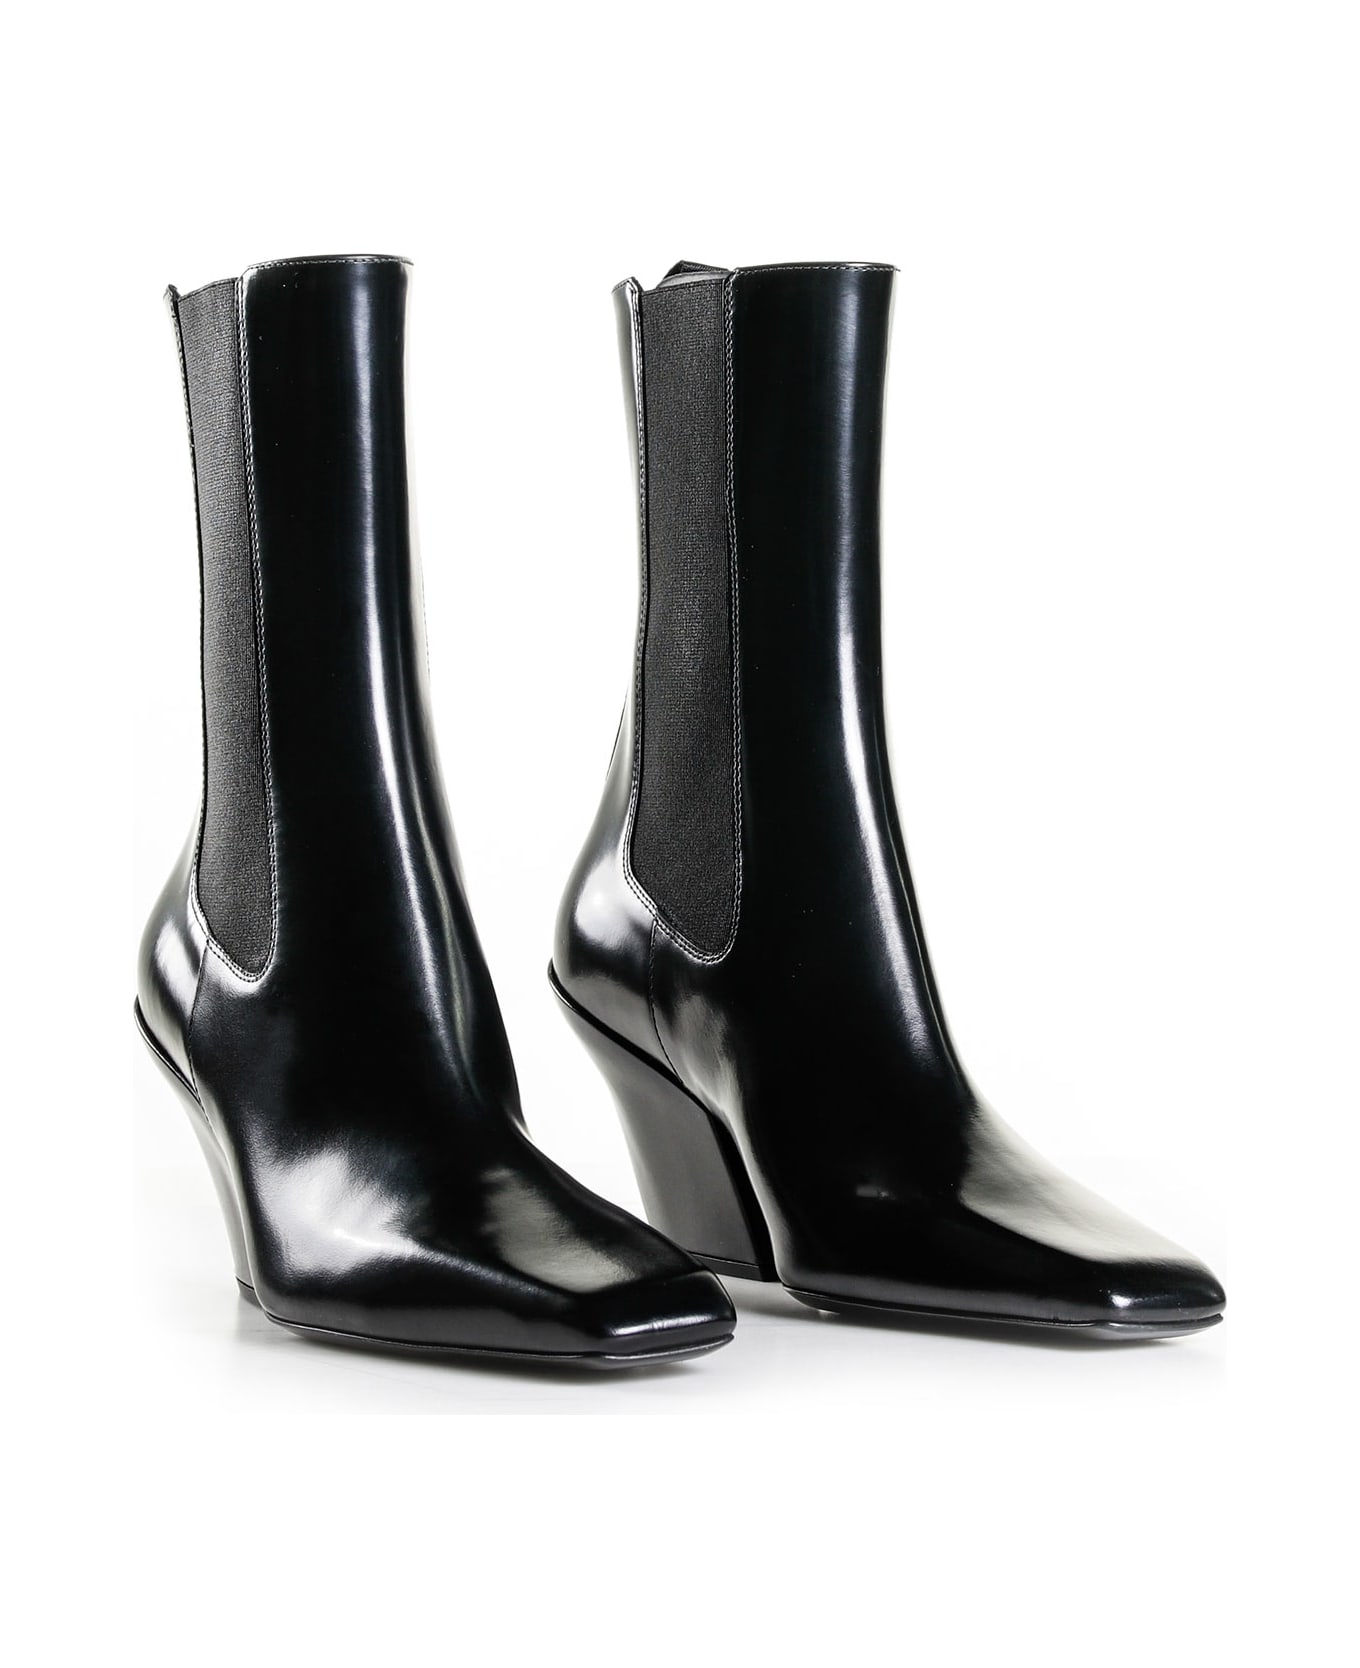 Prada Square Toe Heeled Chelsea Boots - NERO